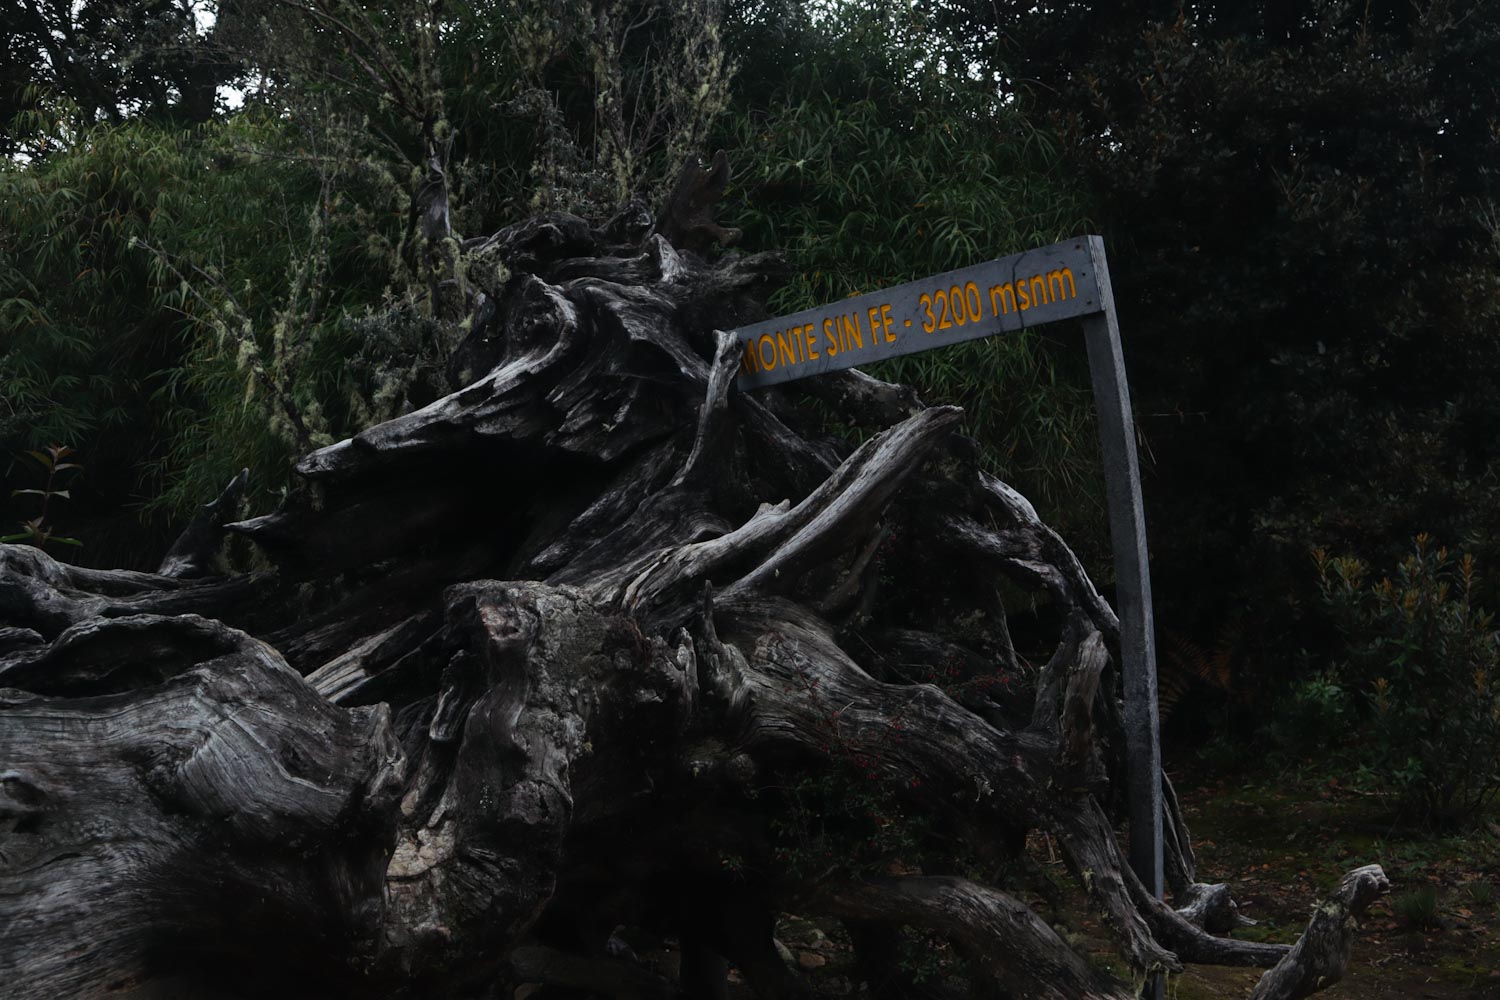 Monte sin Fe табличка у поваленного дерева